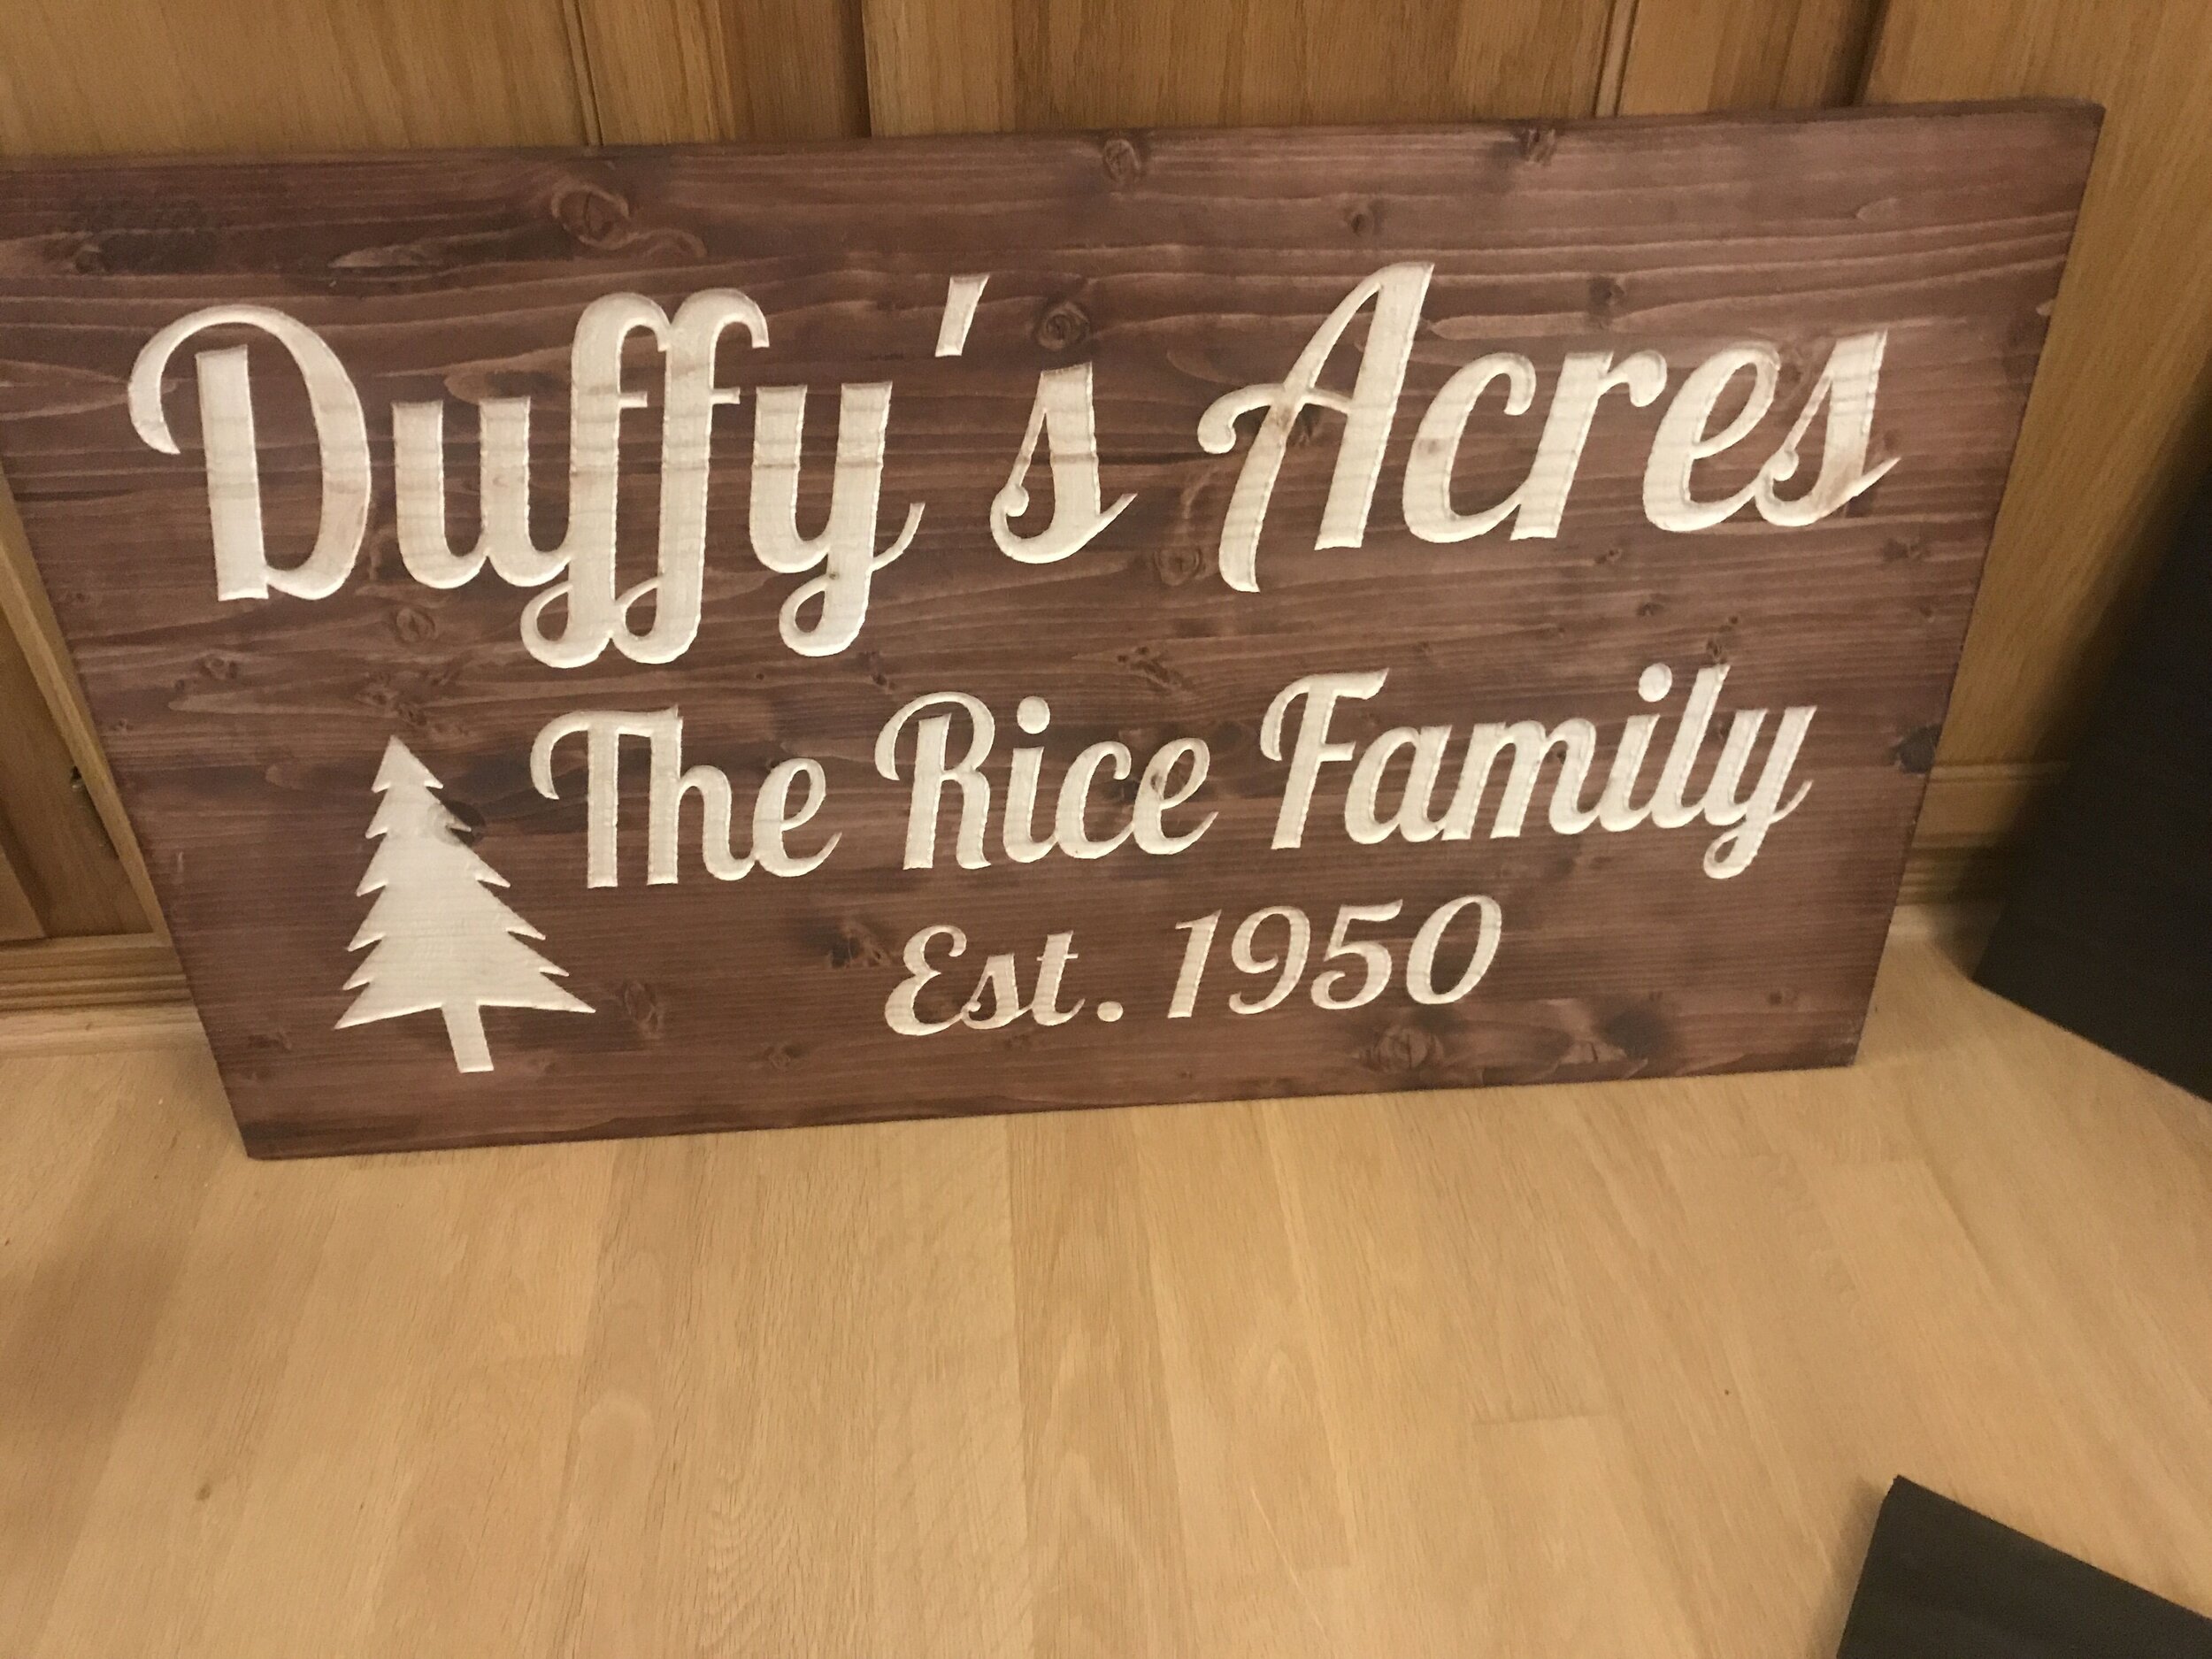 Duffy_s Acres.jpg